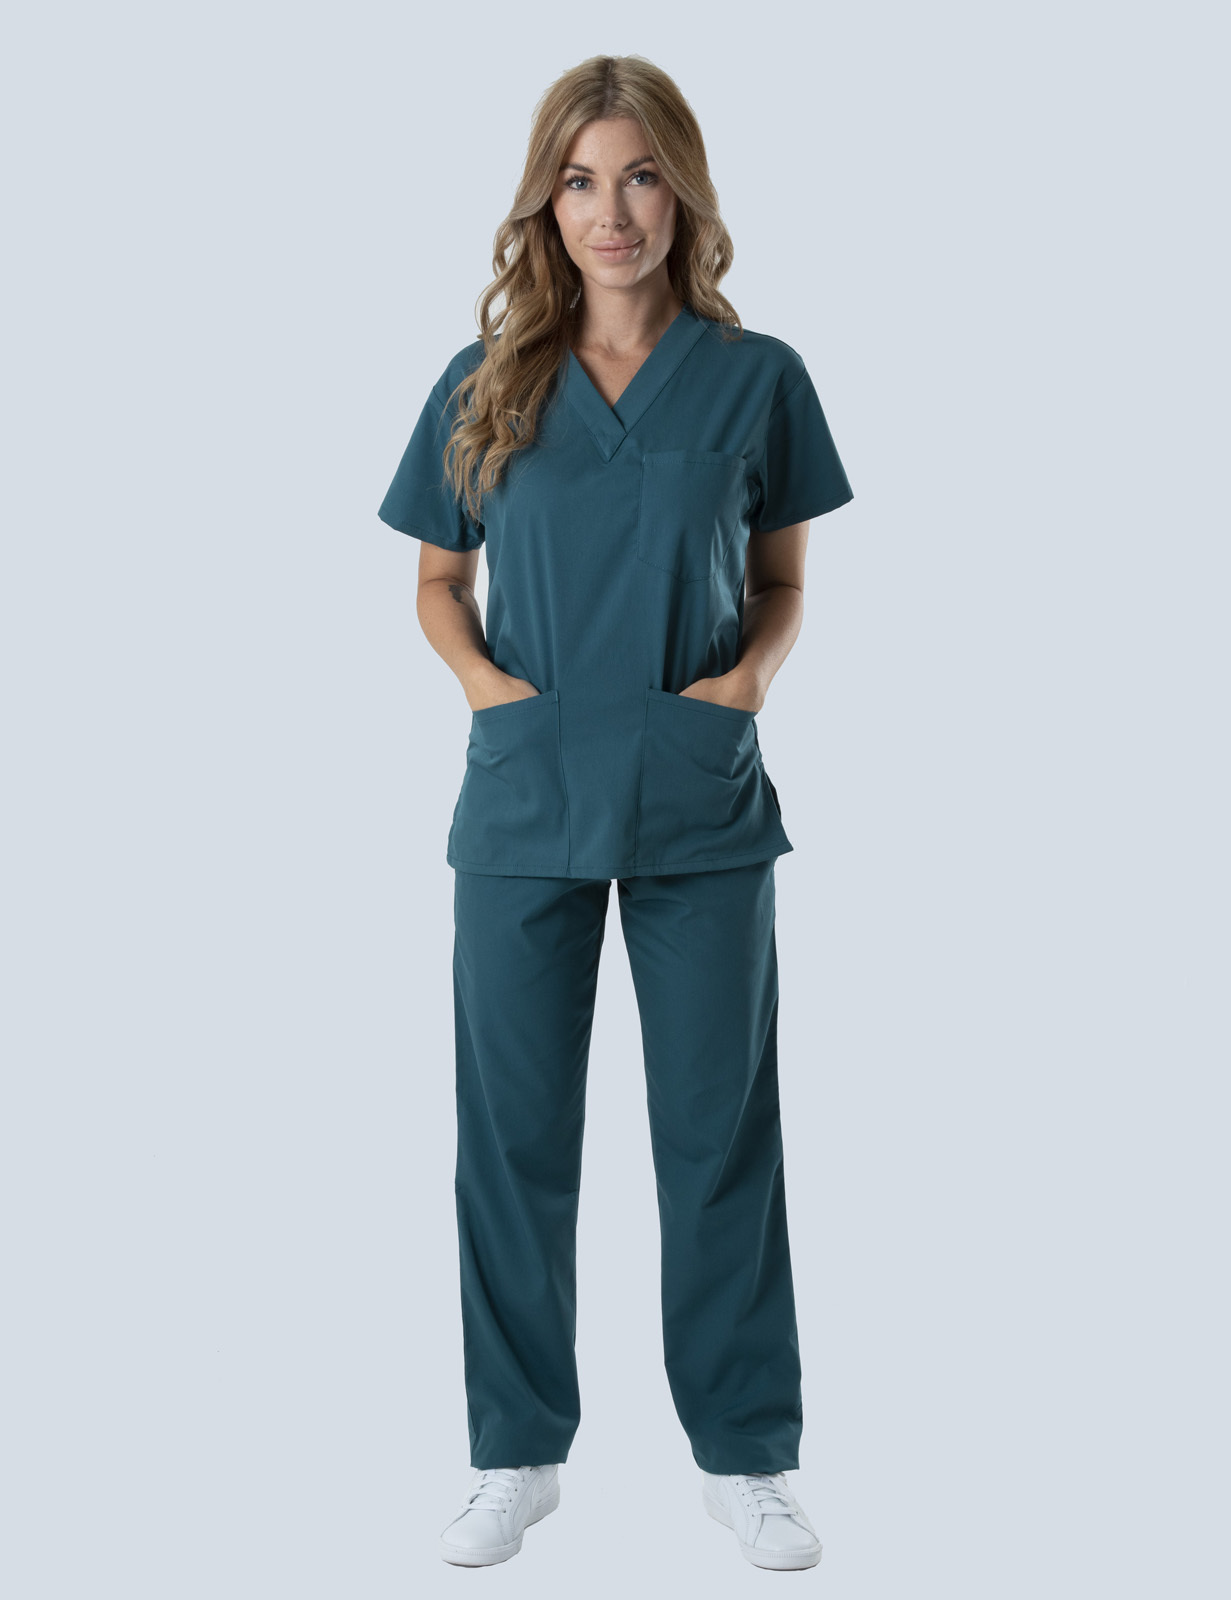 Royal Hobart Hospital Emergency Department Specialist Uniform Set Bundle (Women's Fit Top and Cargo Pants in Caribbean  incl Logo)